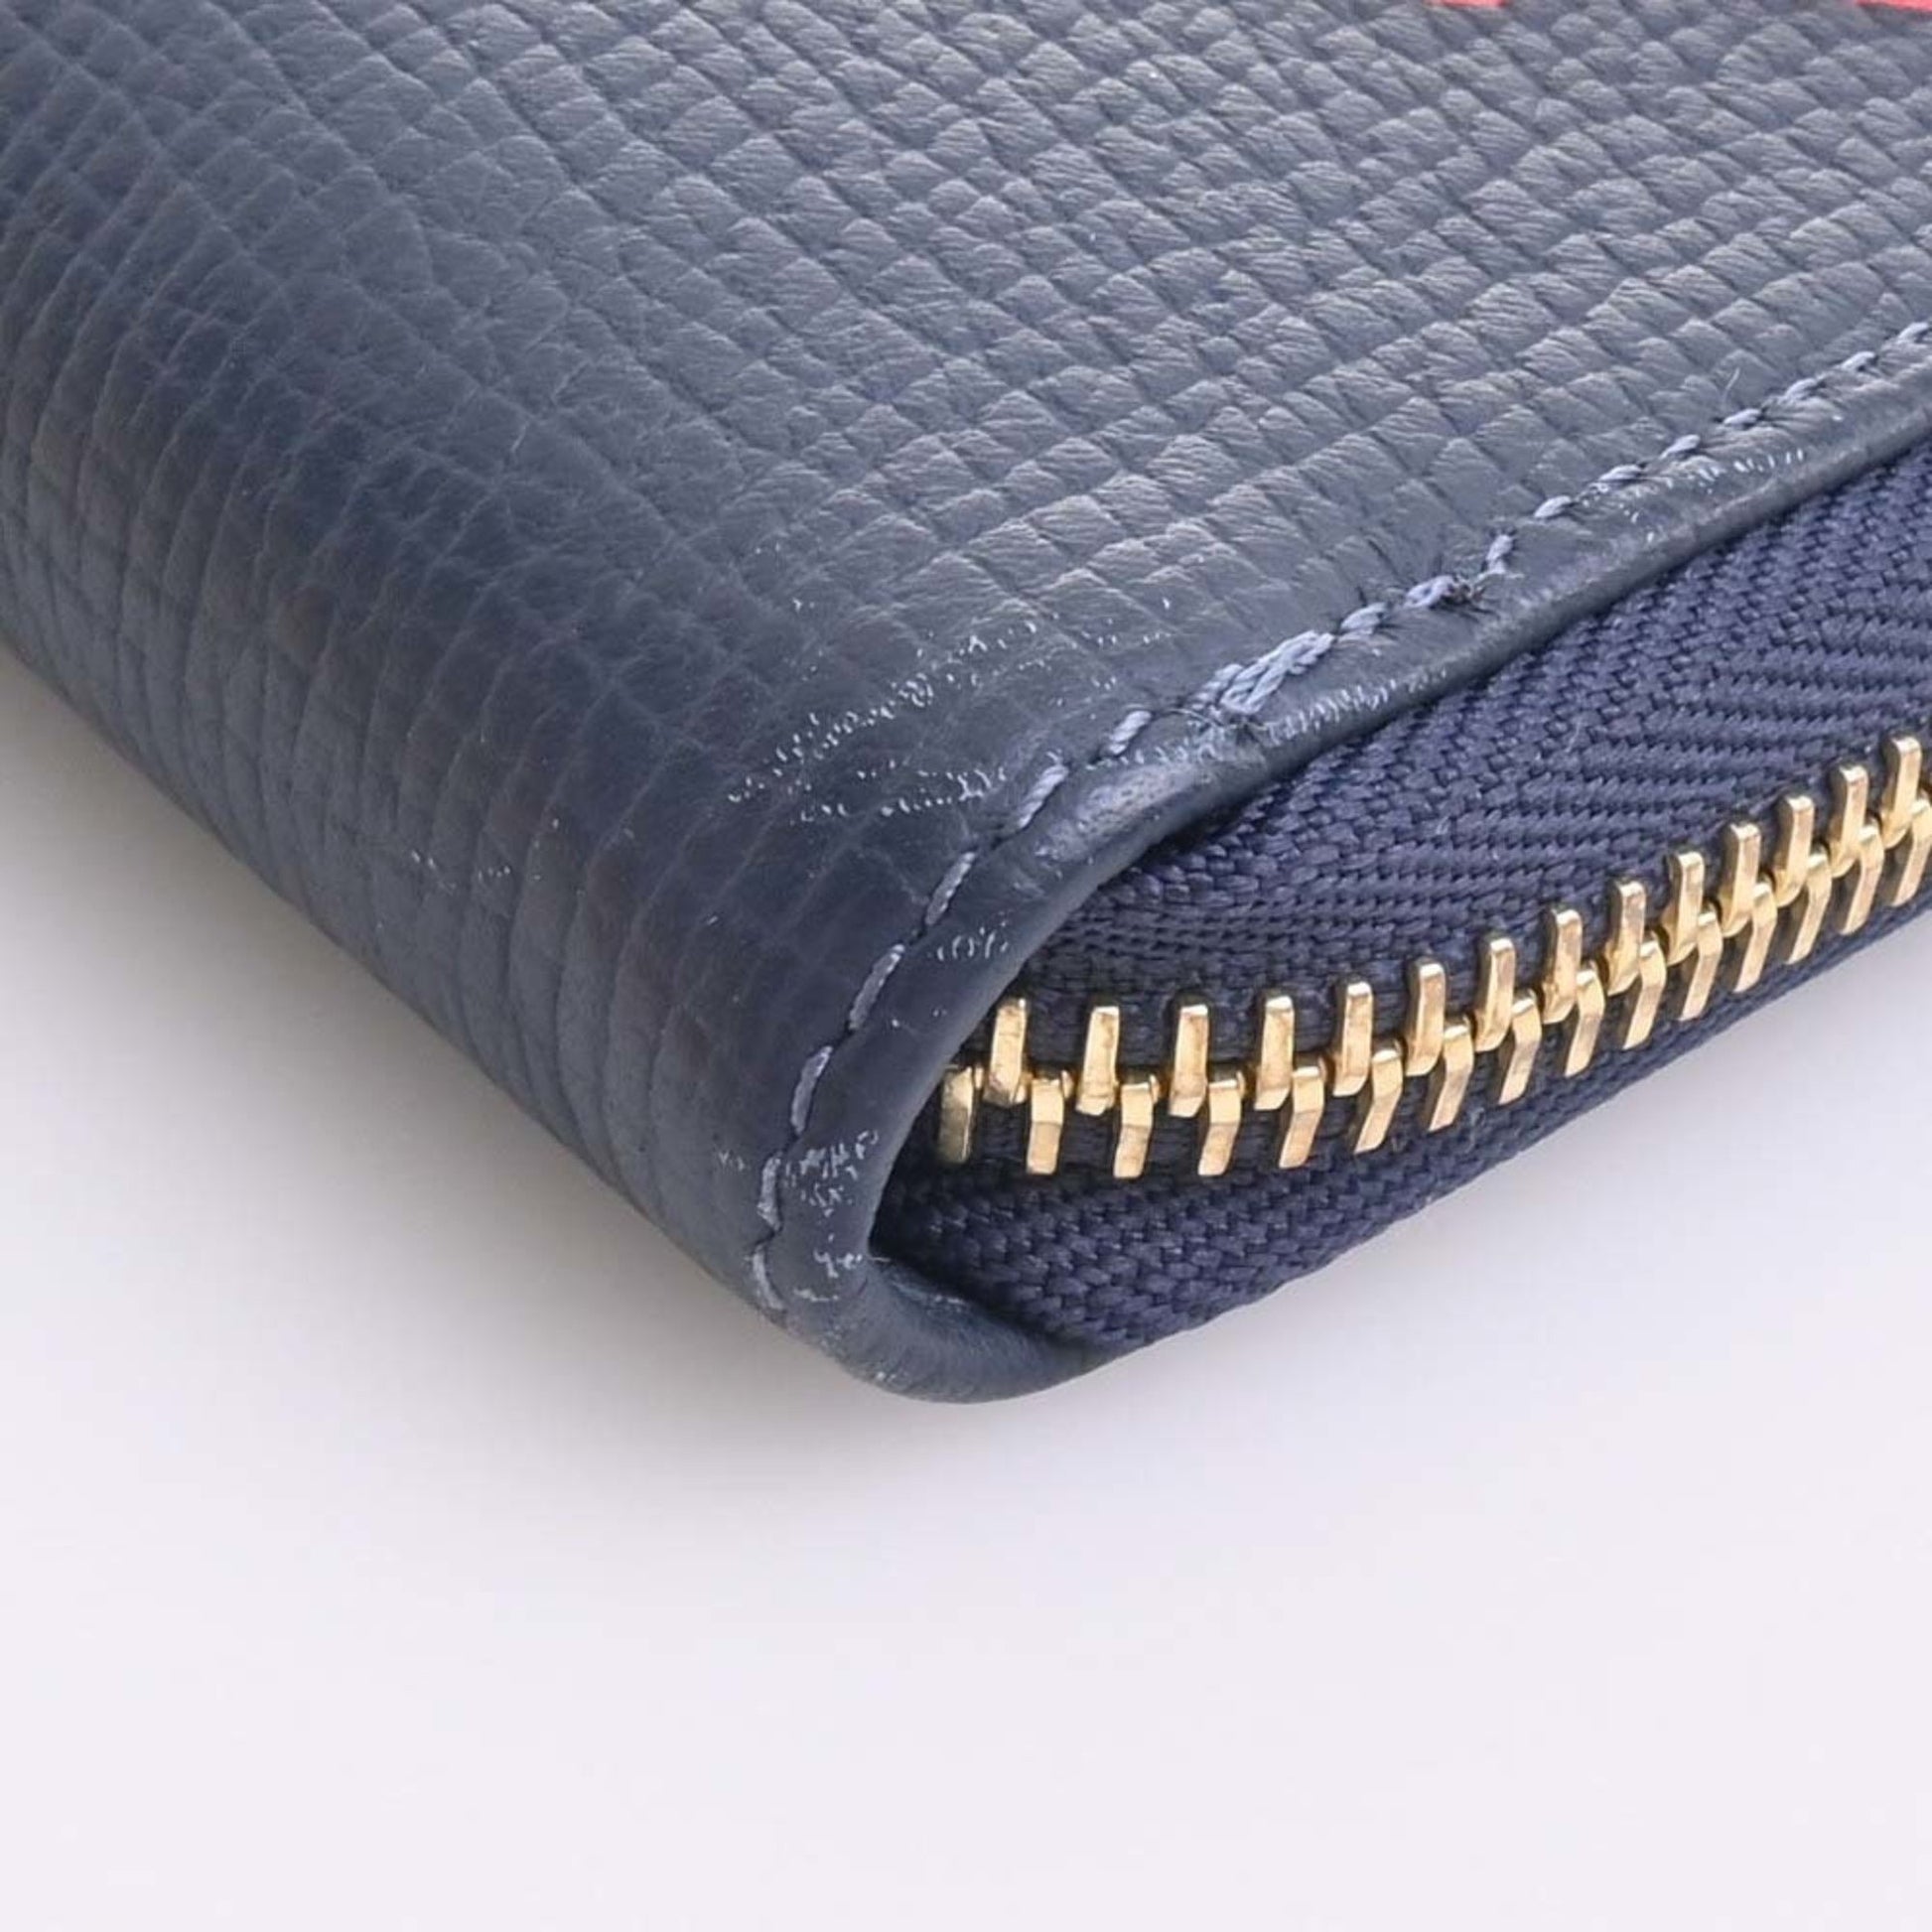 Louis Vuitton Monogram Denim Zippy Long Wallet Black Dark Blue used from  japan